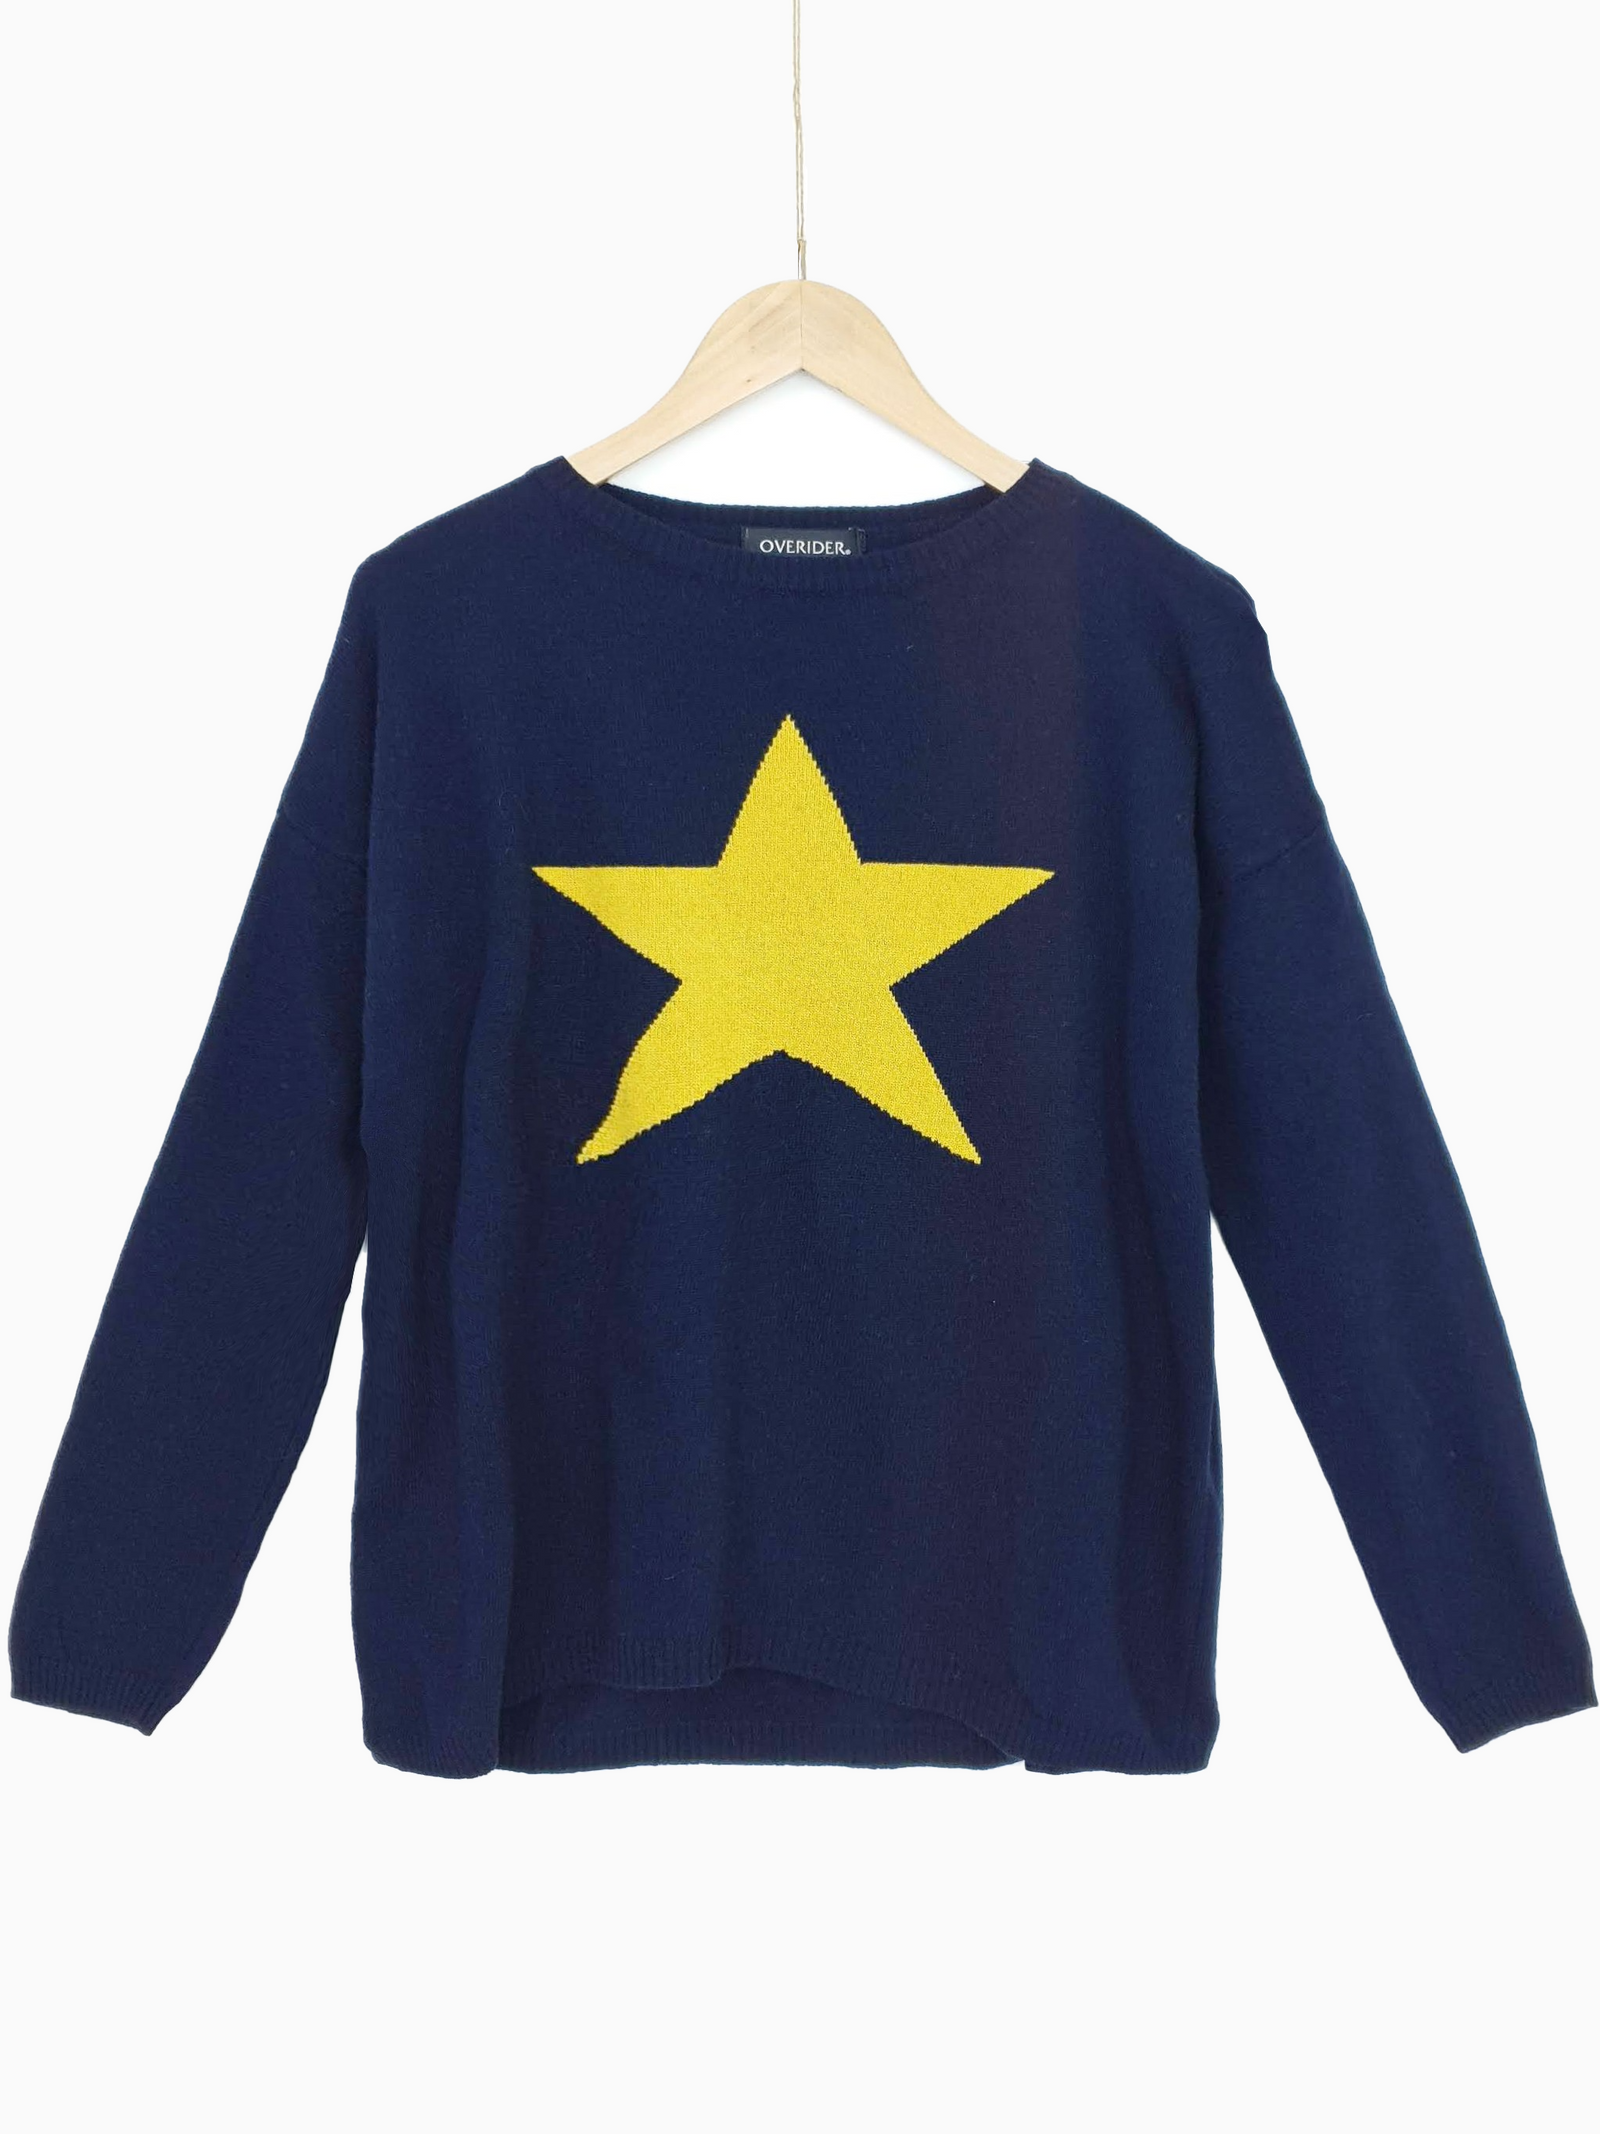 STAR - Cashmere Blend Jumper - Navy/Gold